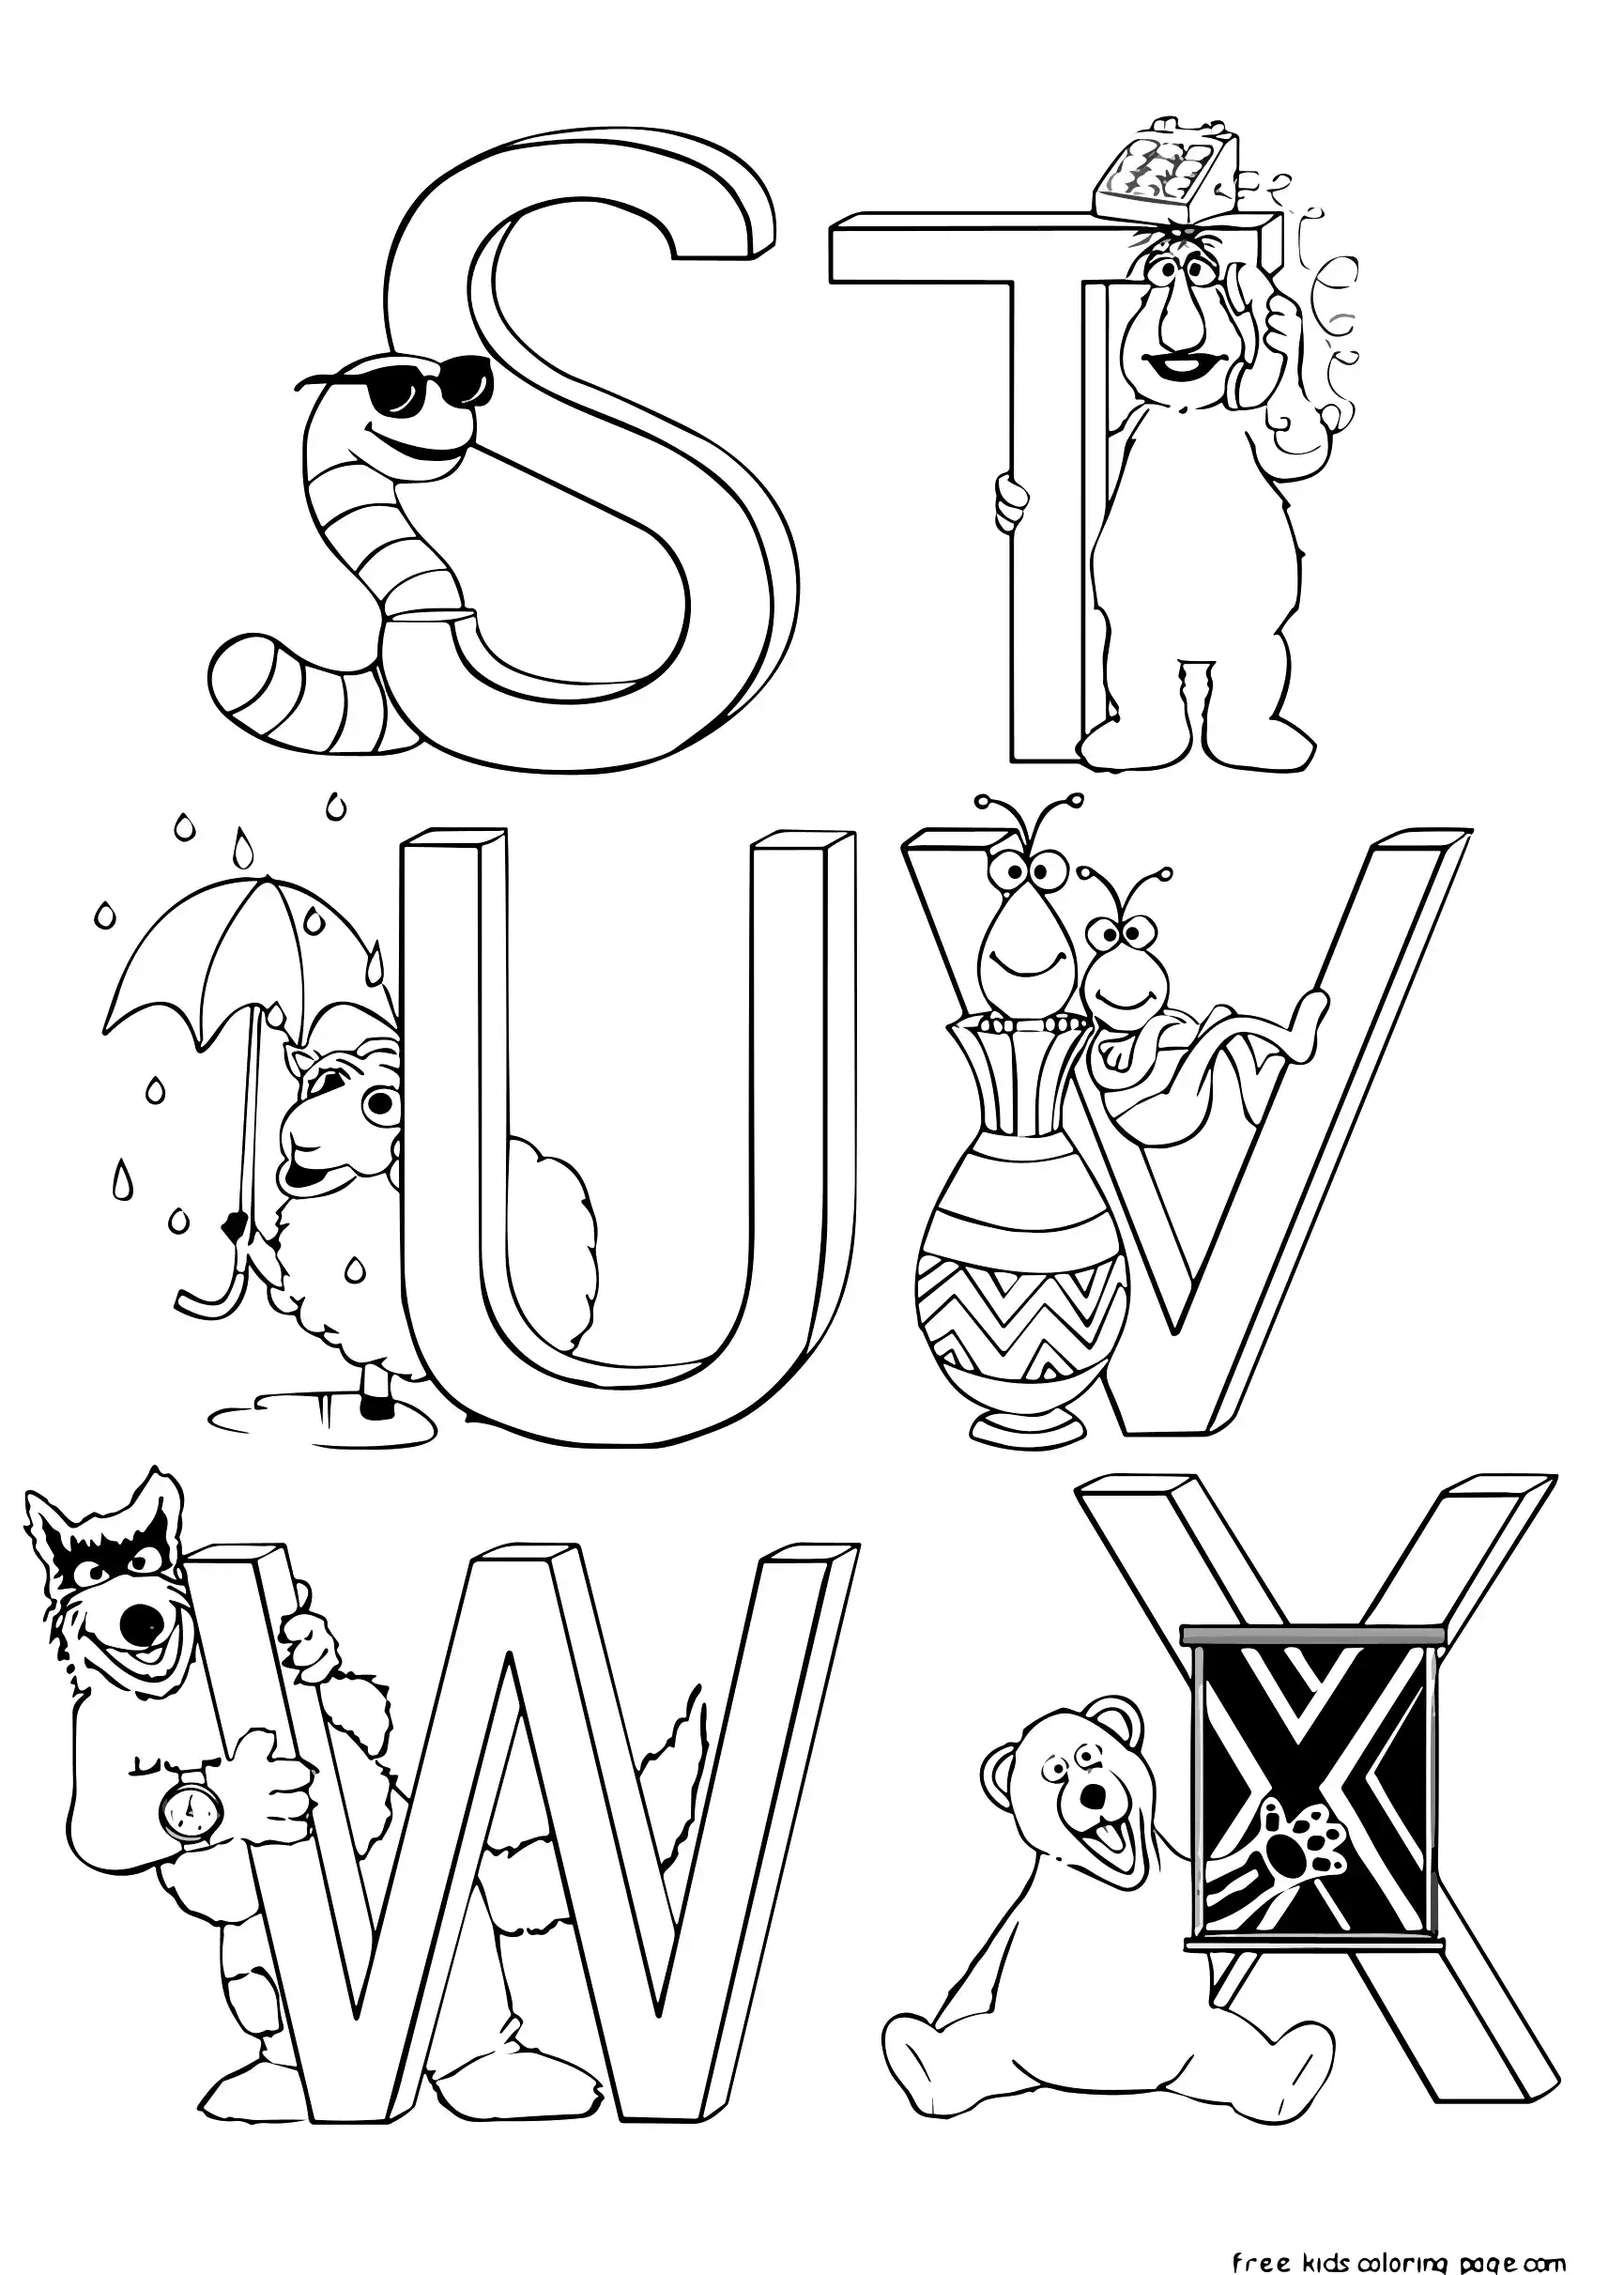 Alphabet worksheets Sesame Street to printable color in alphabet letters